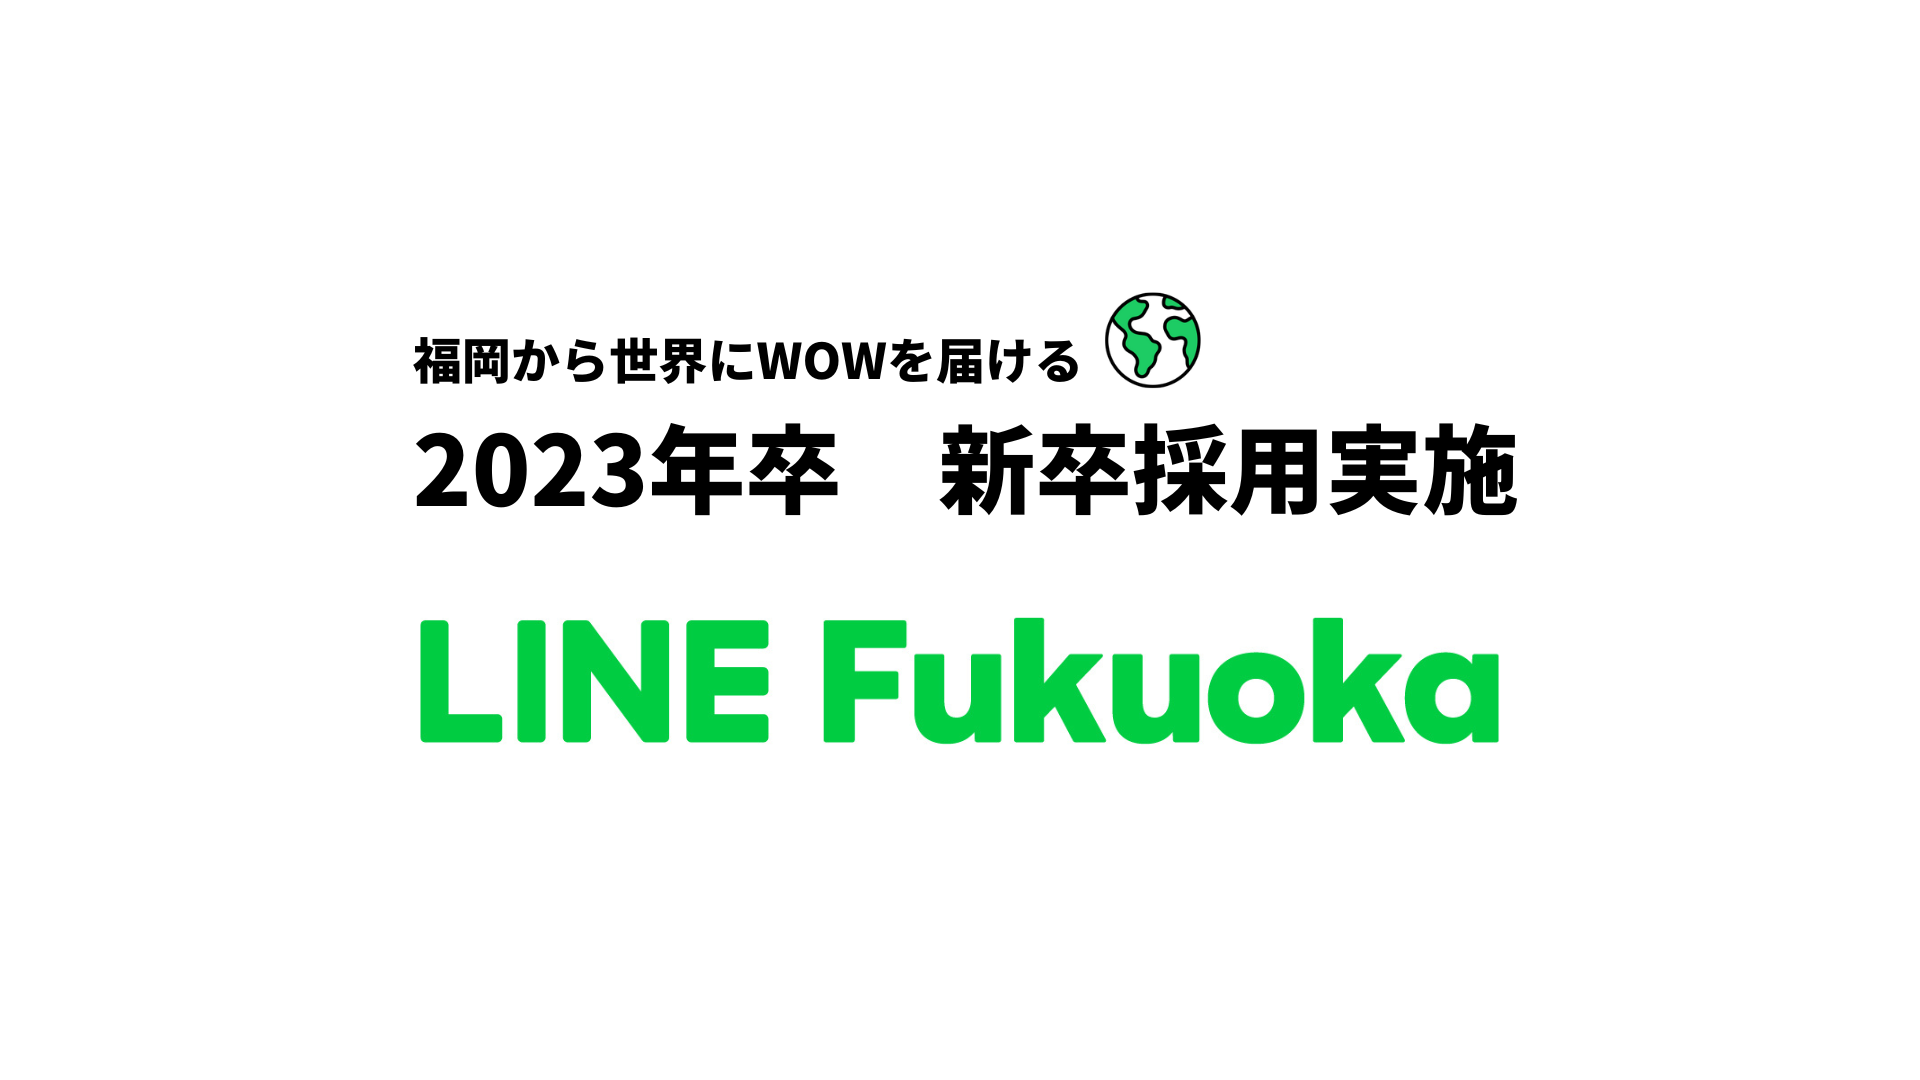 LINE Fukuoka 2023年卒 新卒採用実施します！ サムネイル画像